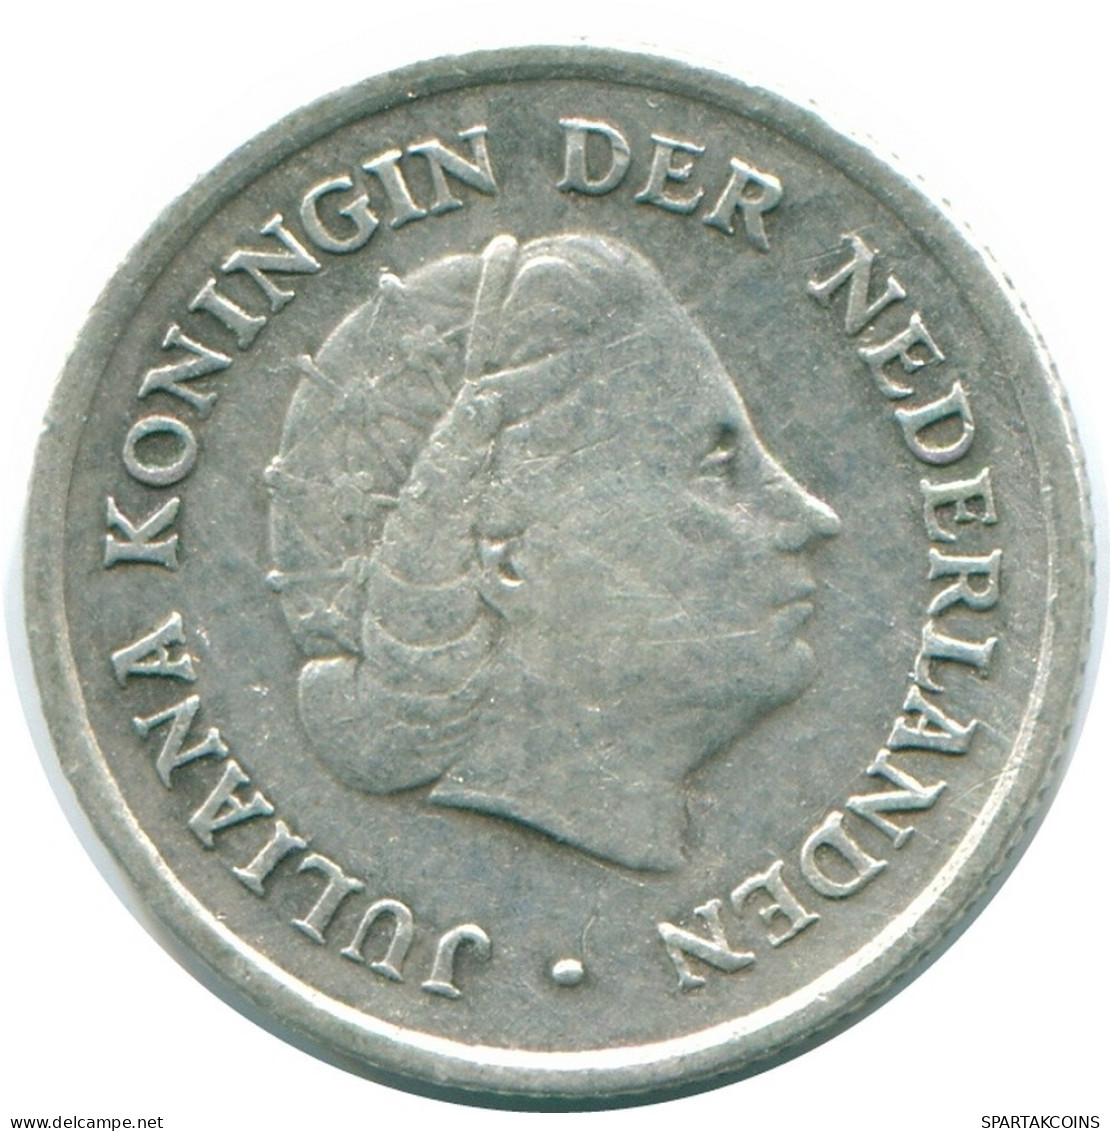 1/10 GULDEN 1960 NETHERLANDS ANTILLES SILVER Colonial Coin #NL12275.3.U.A - Antilles Néerlandaises